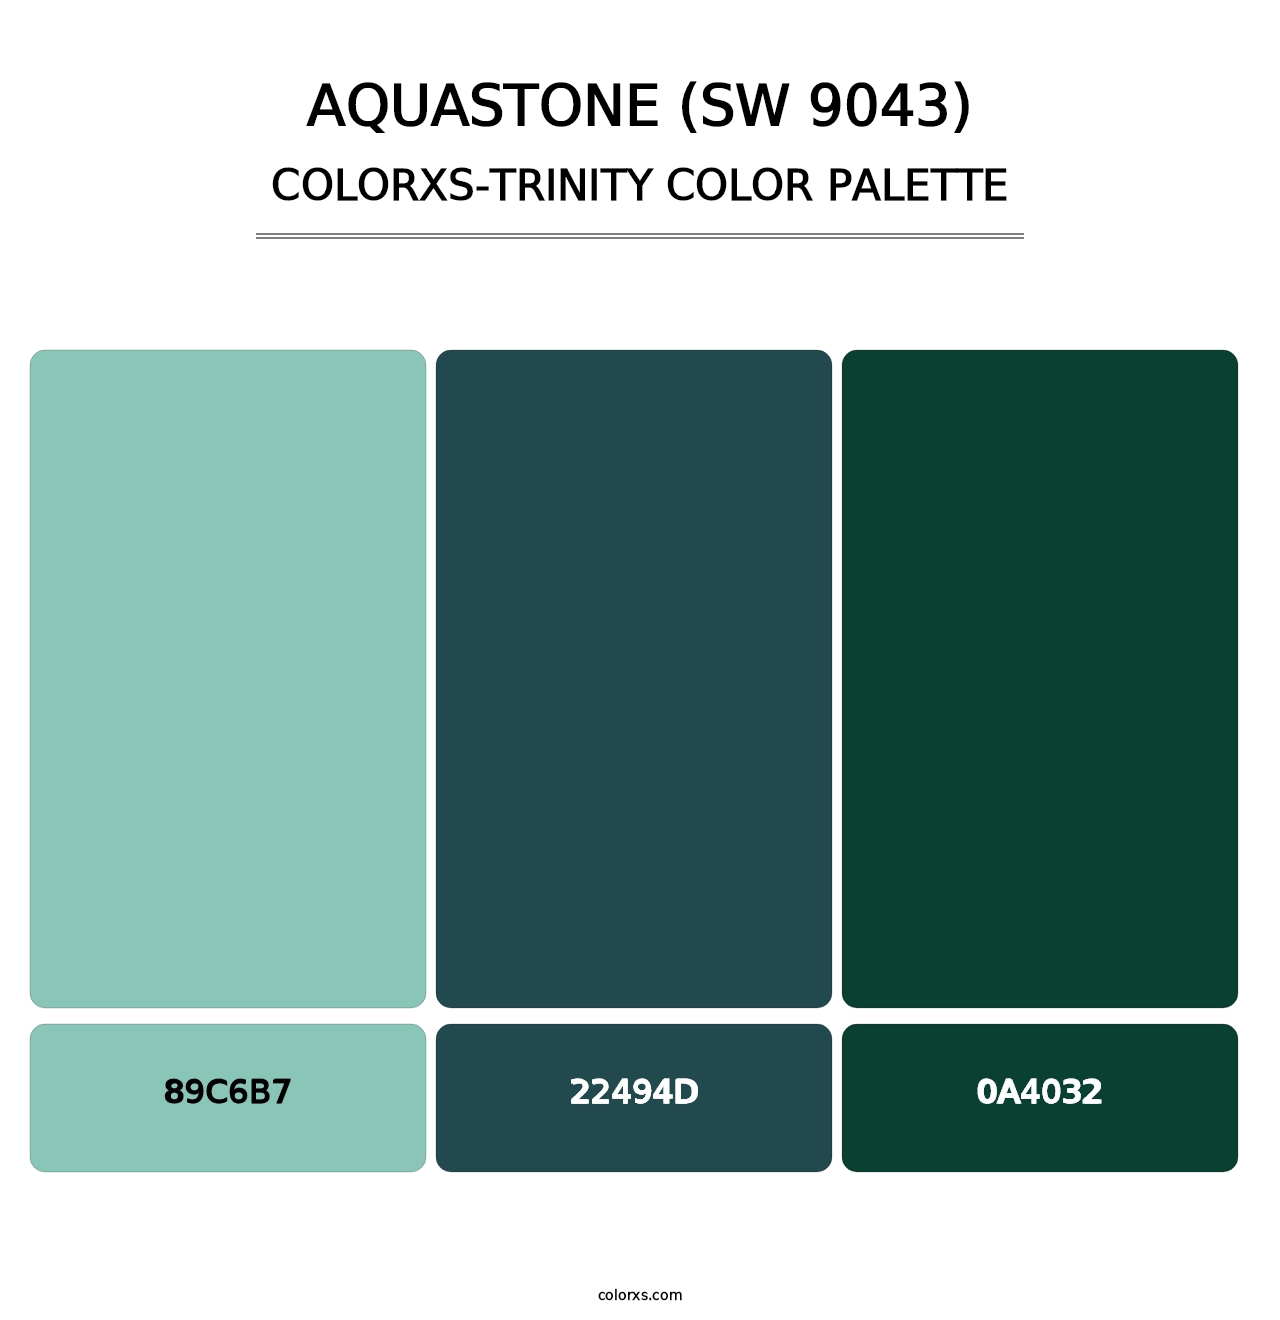 Aquastone (SW 9043) - Colorxs Trinity Palette